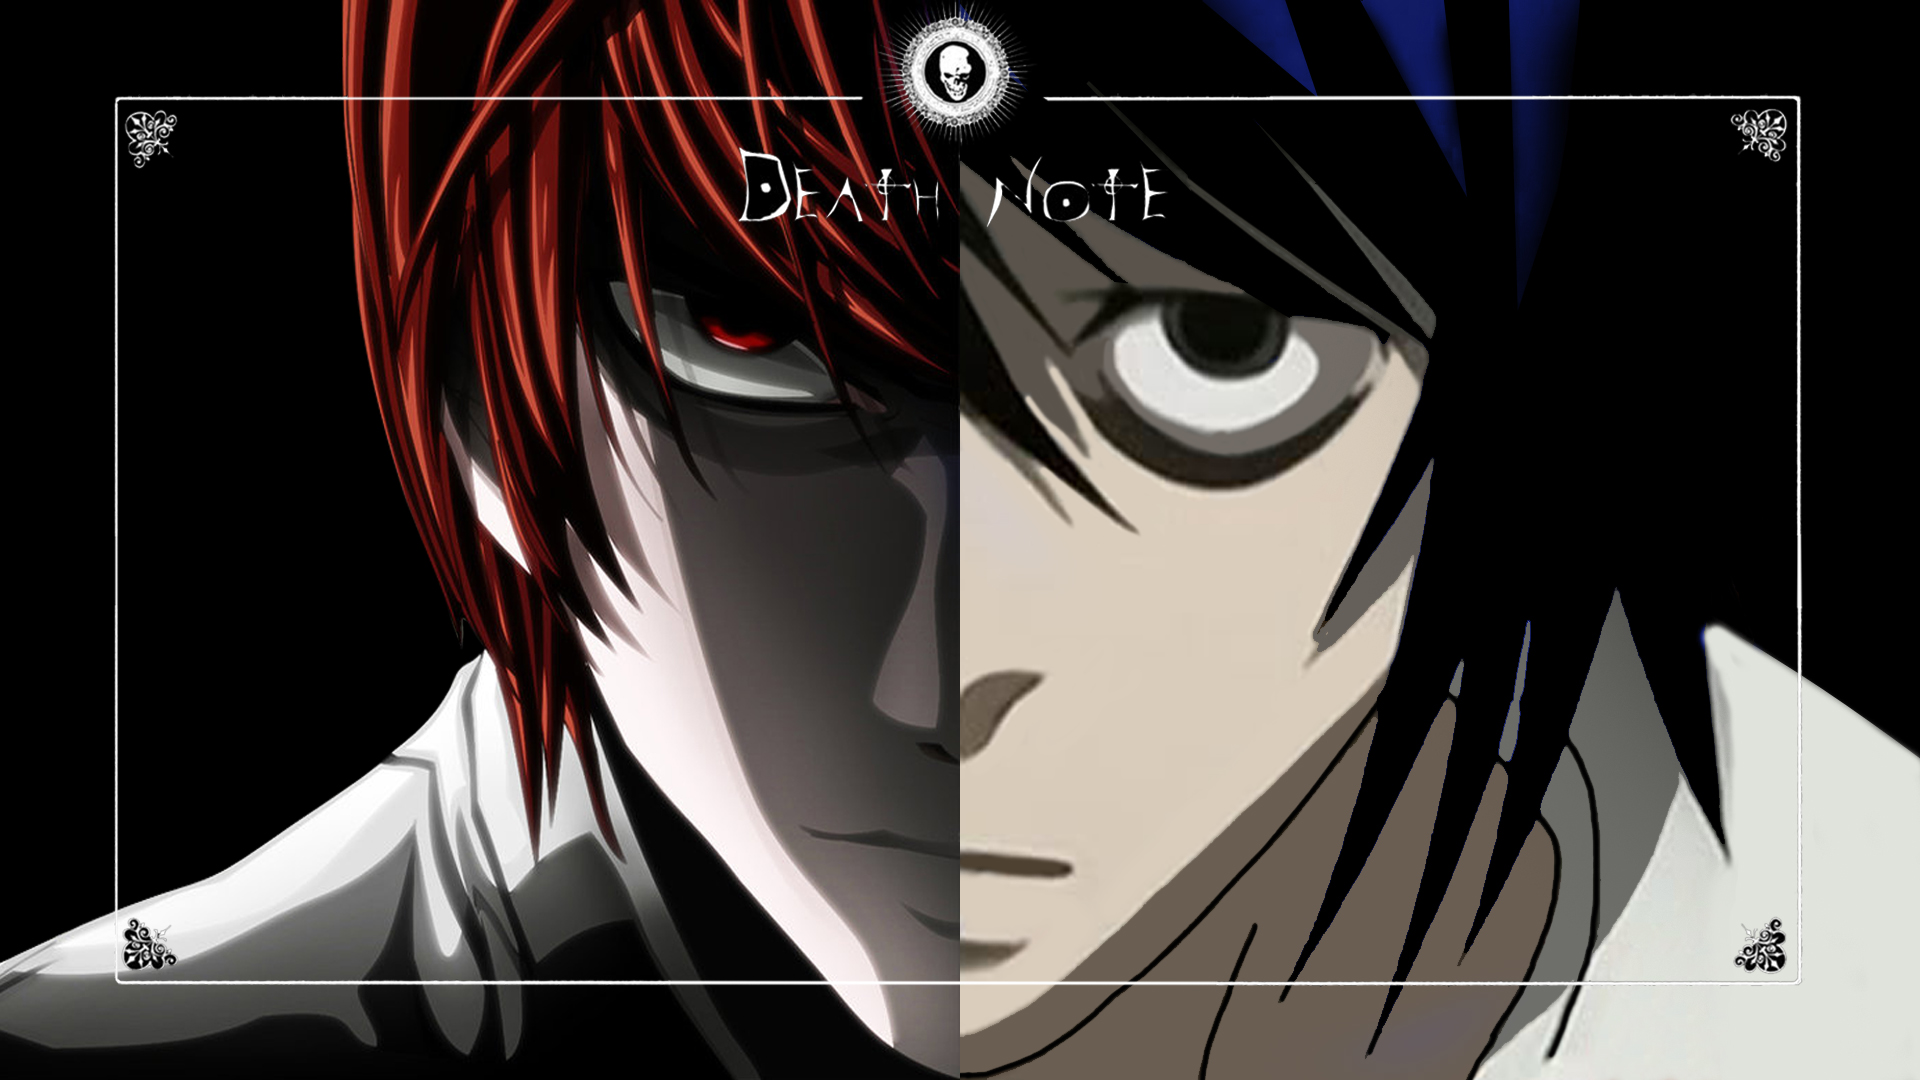 Death Note Kira vs L by ElErnie on DeviantArt